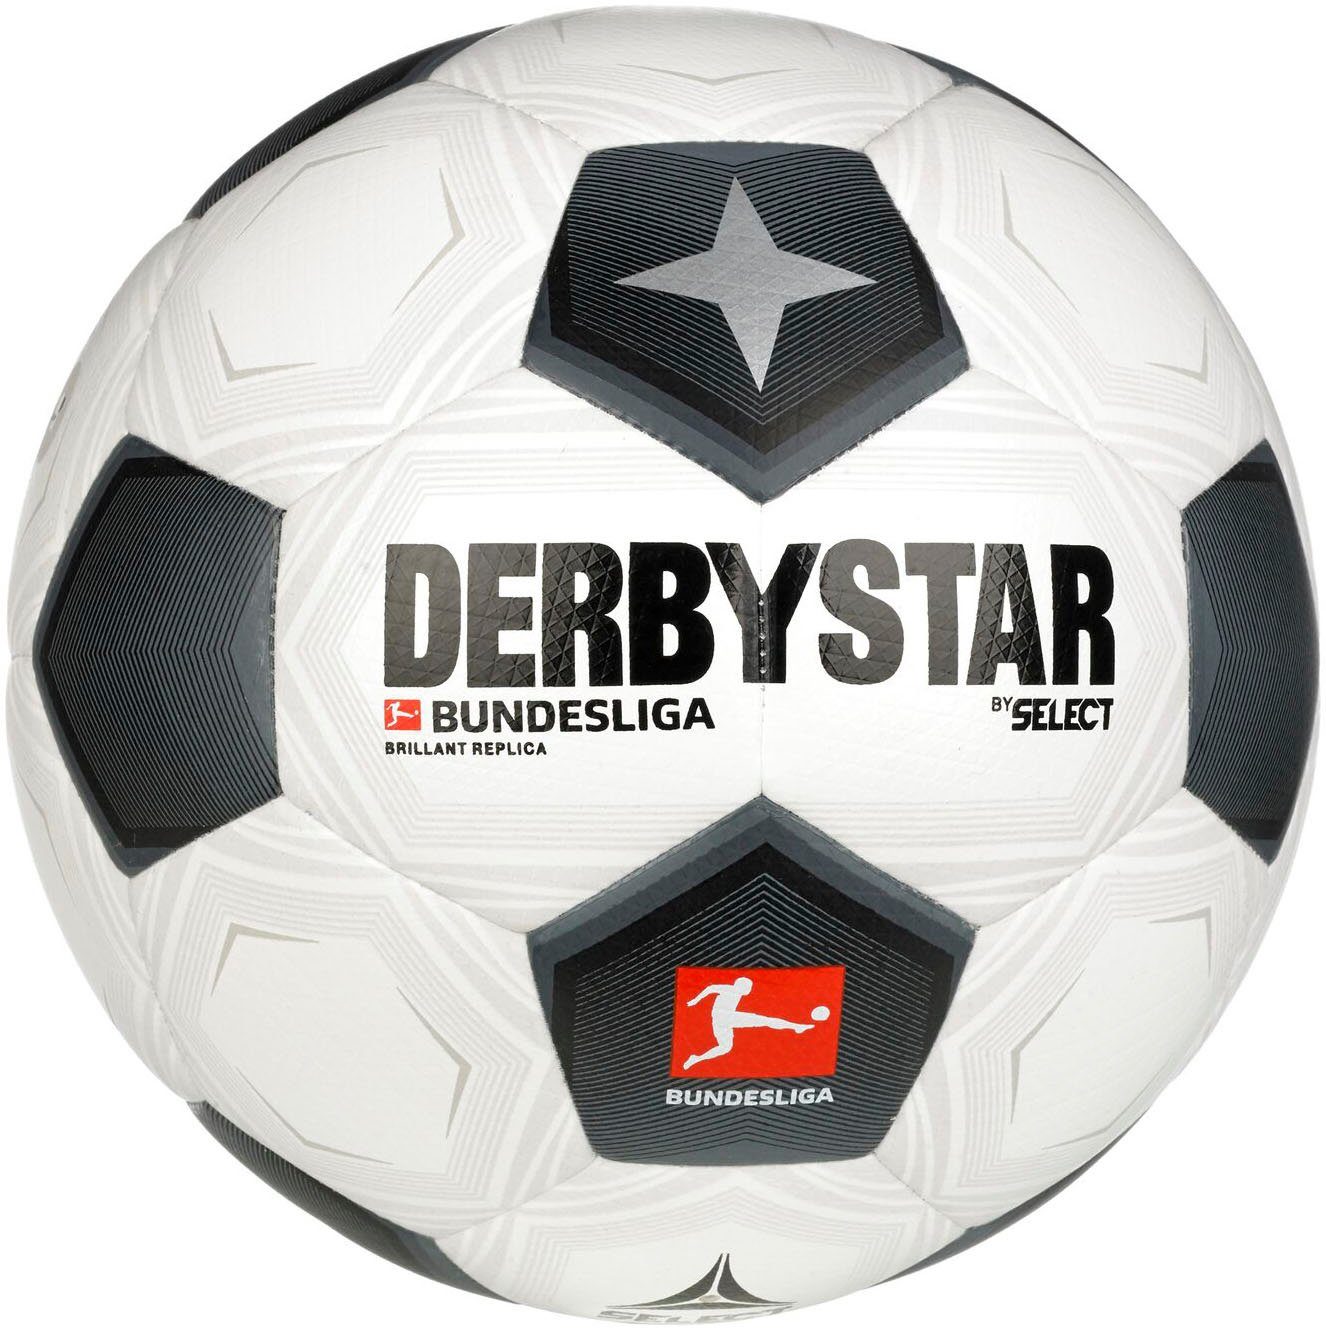 Classic Derbystar Fußball Replica Bundesliga Brillant